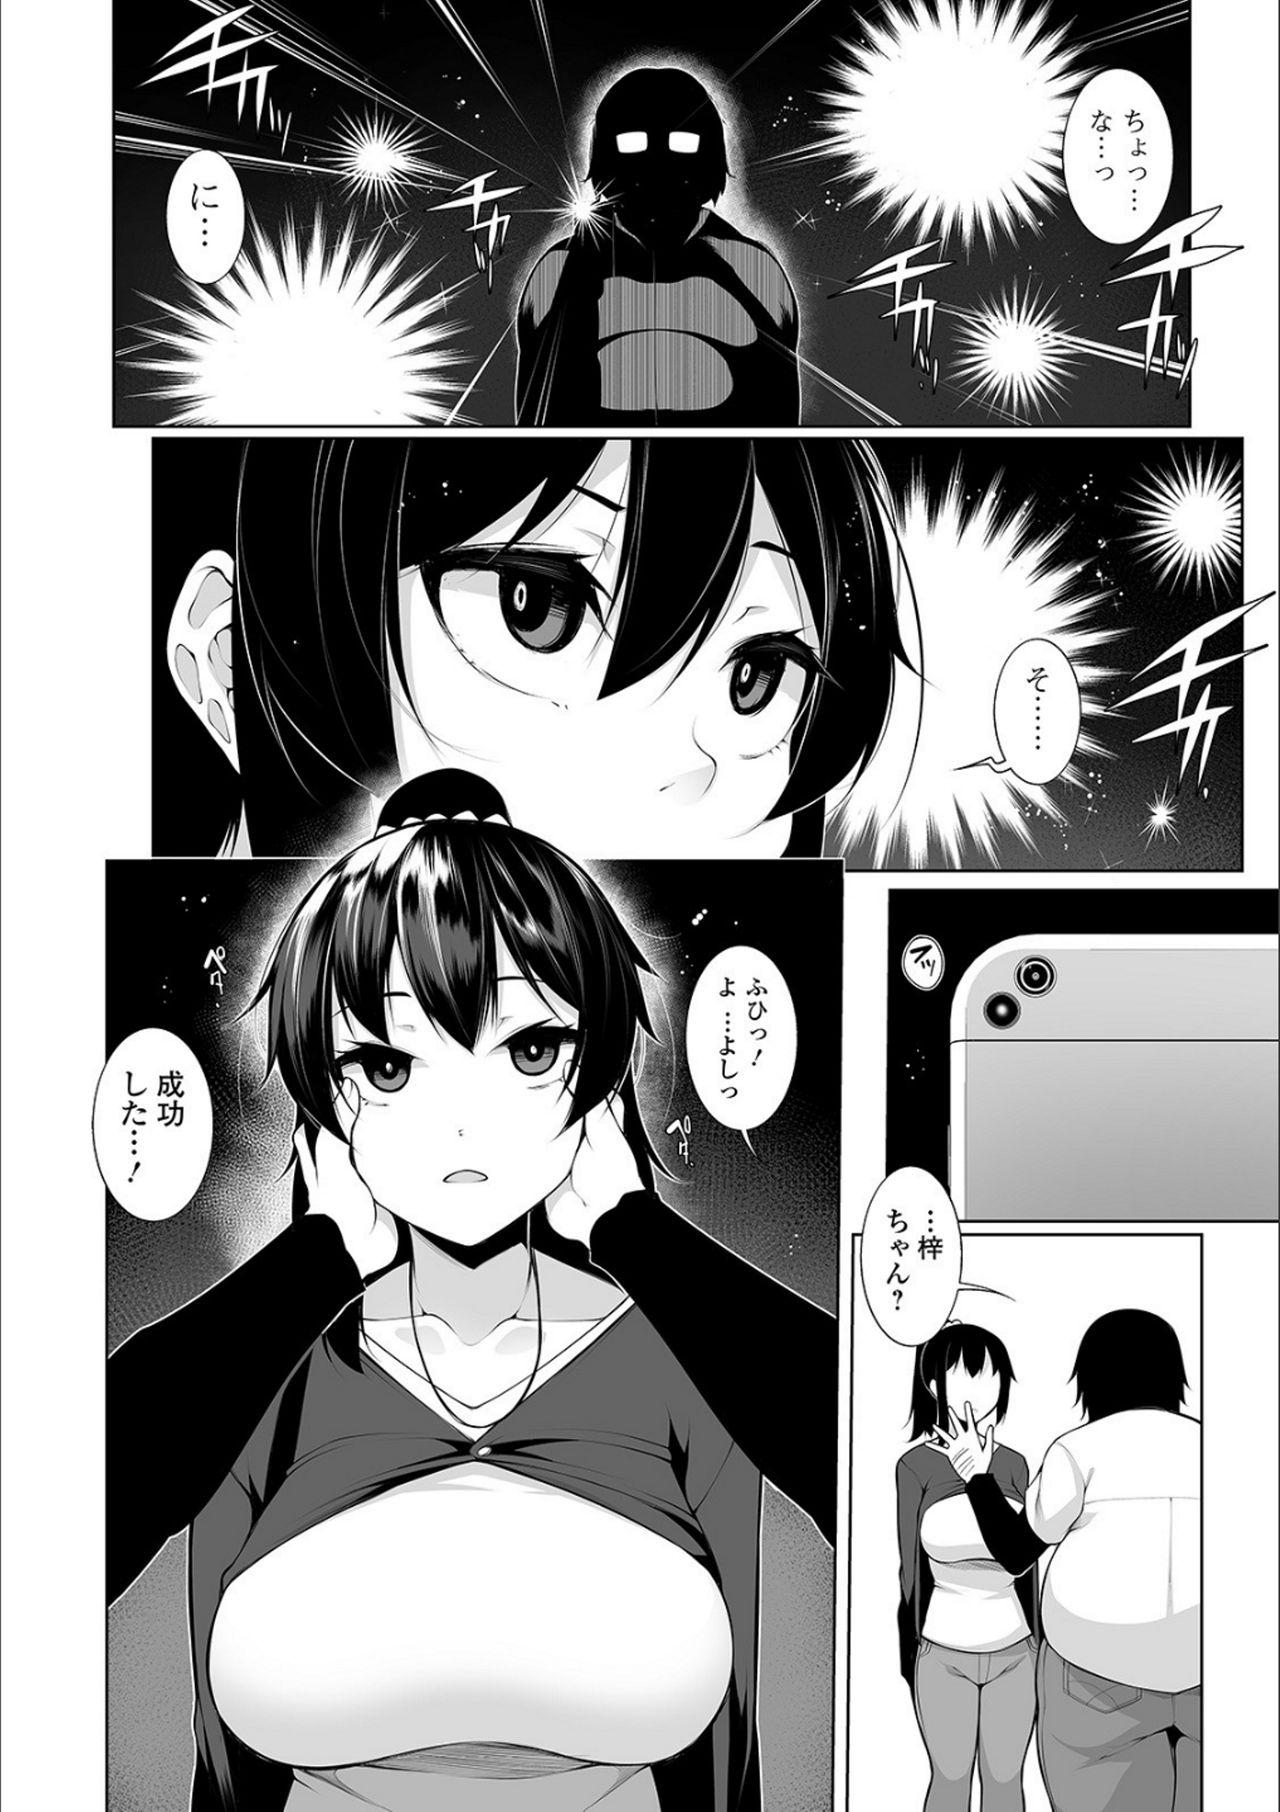 HYPNO BLINK Ver.1.0 Page 12 Of 200 hentai comic, HYPNO BLINK Ver.1.0 Page 1...